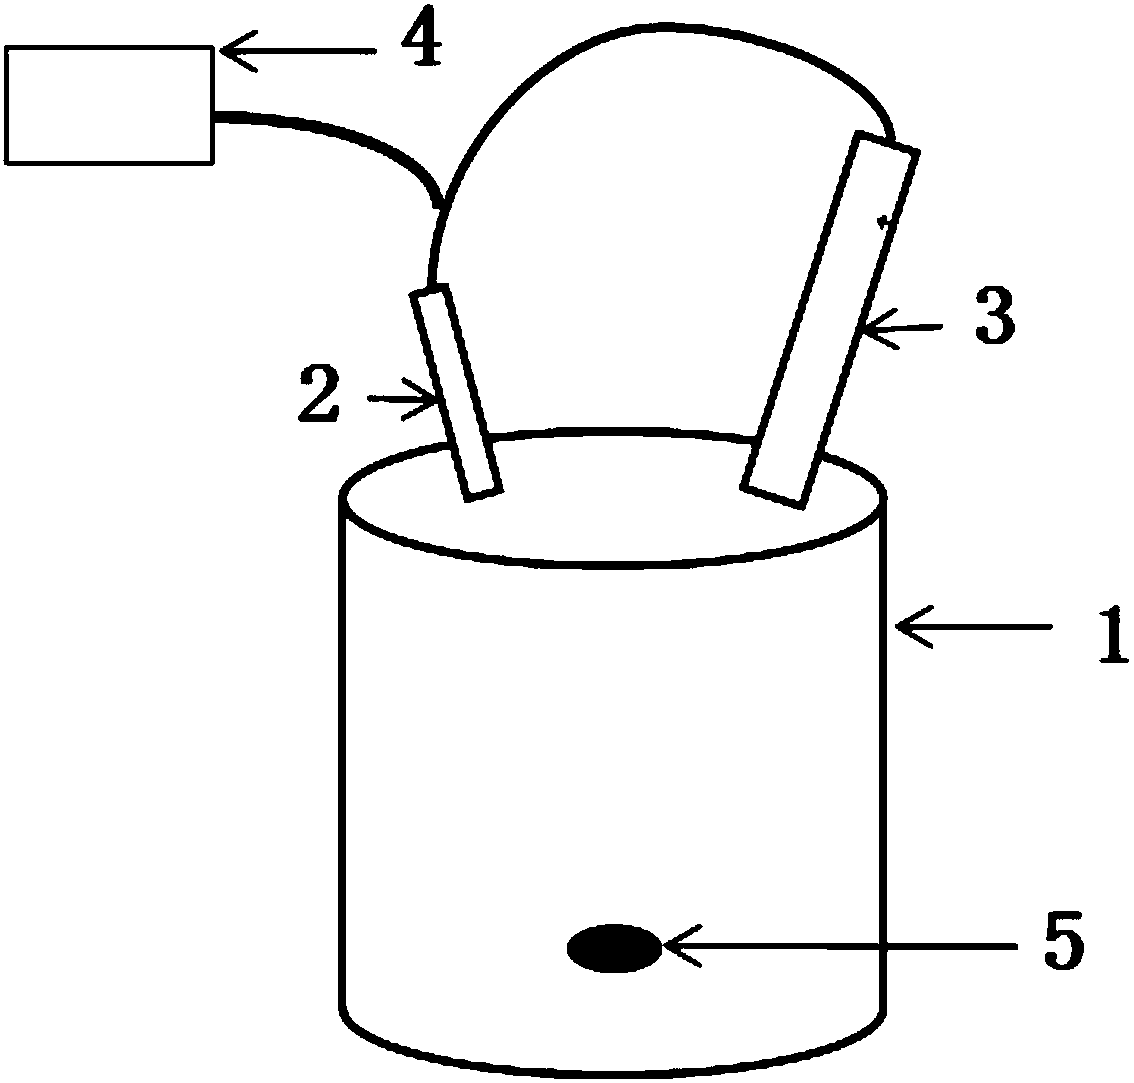 Method for preparing tetrasulfur tetranitride by ammoniation of disulfur dichloride